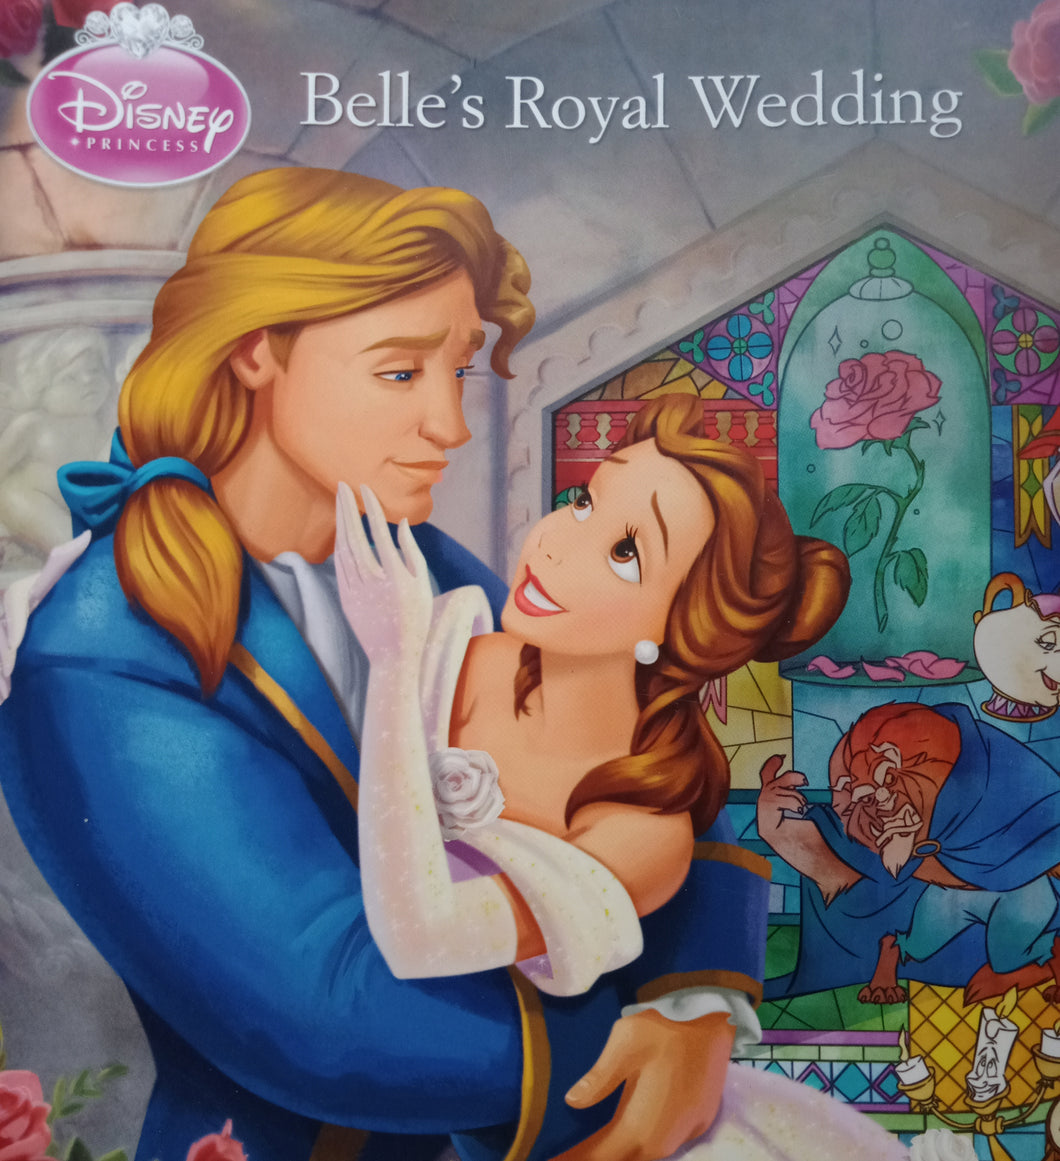 Bell's Royal Wedding